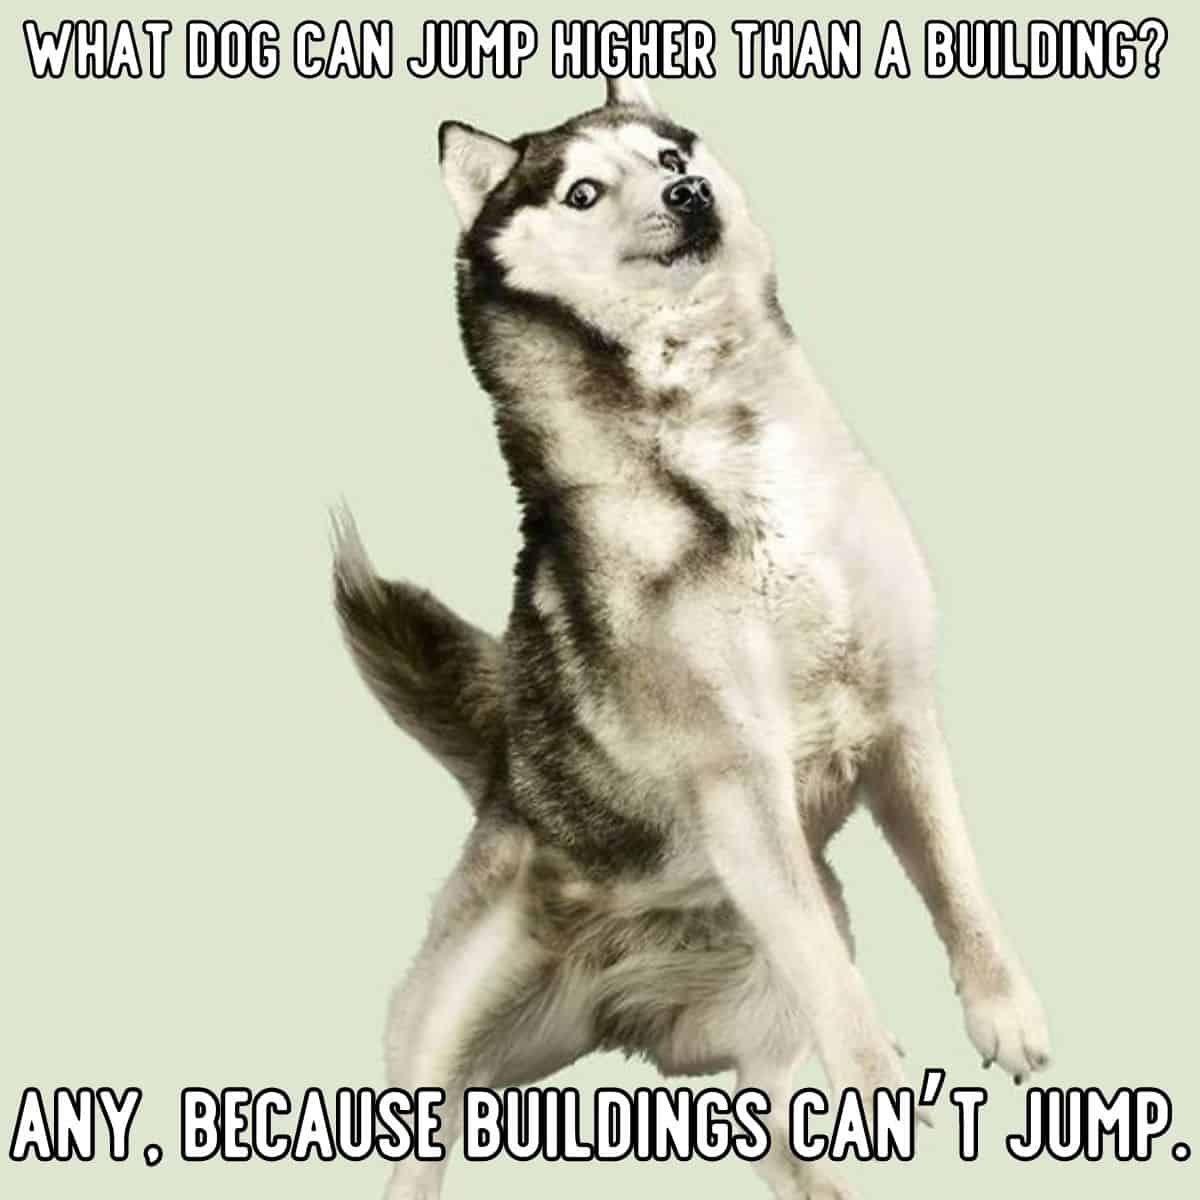 dog and buildings joke